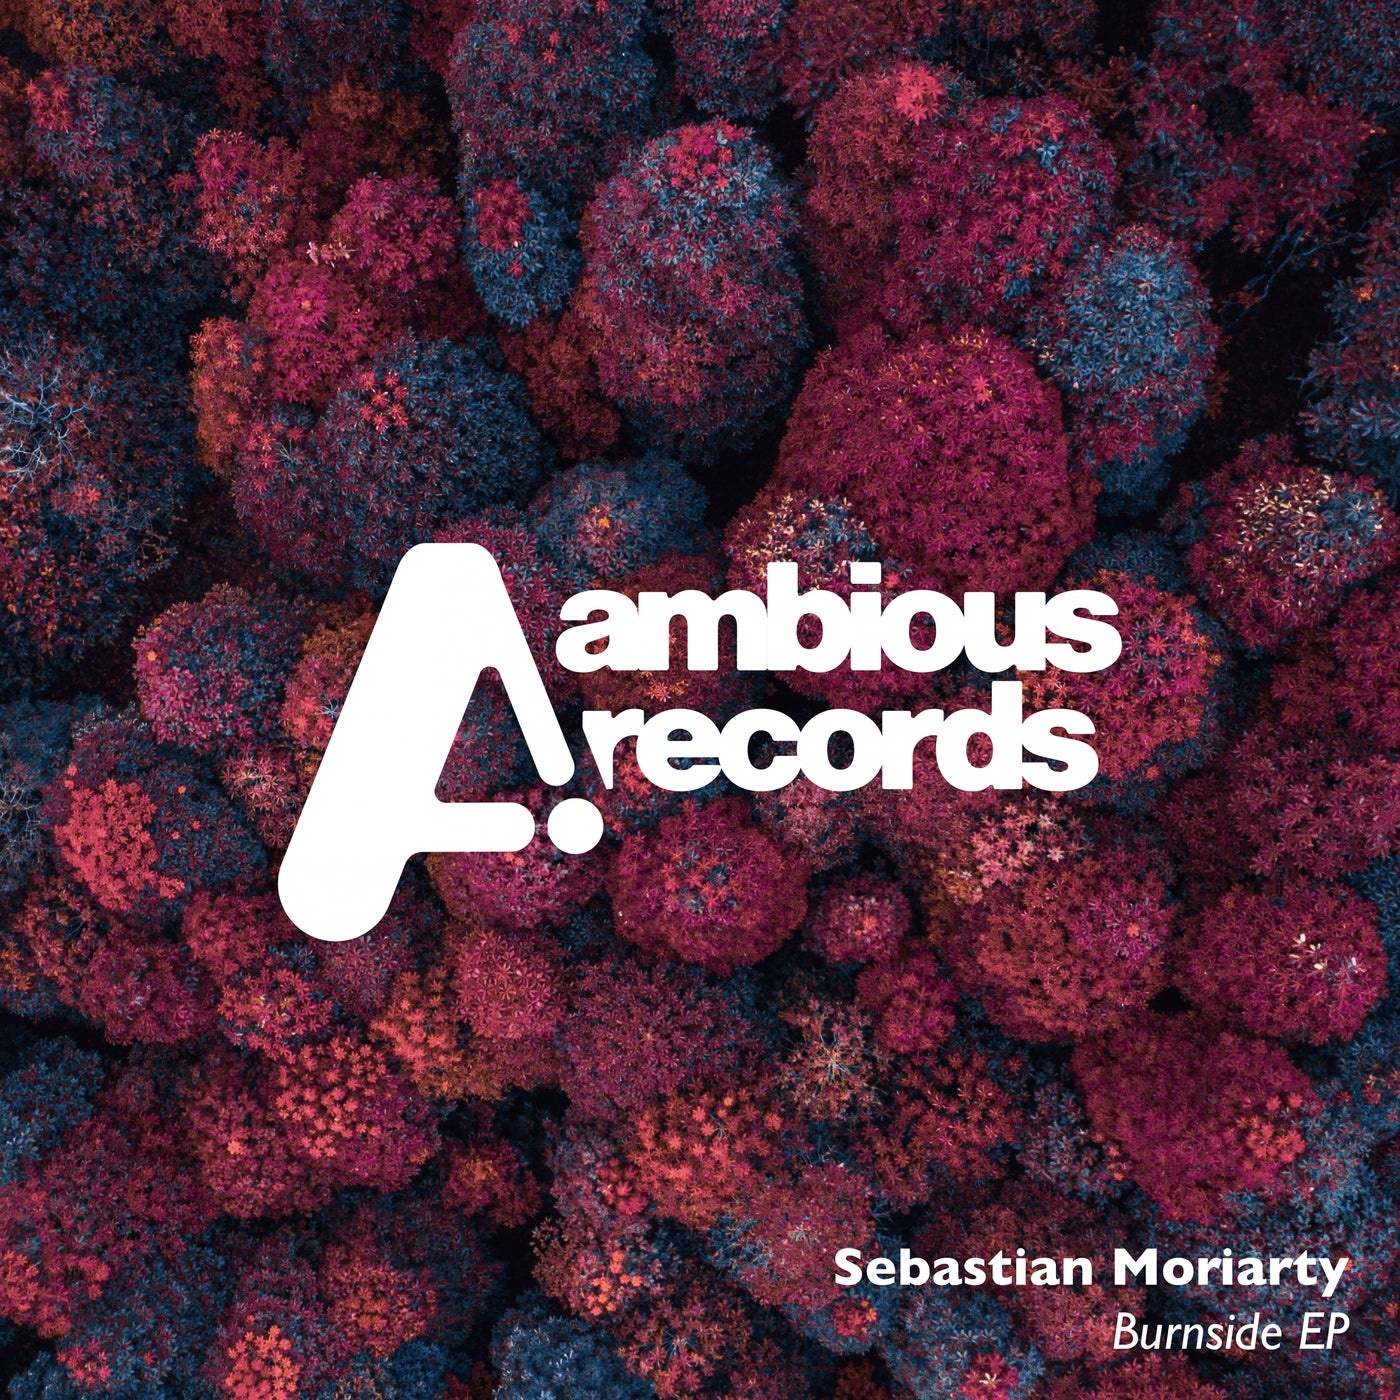 Sebastian Moriarty - Burnside EP [AMB046]